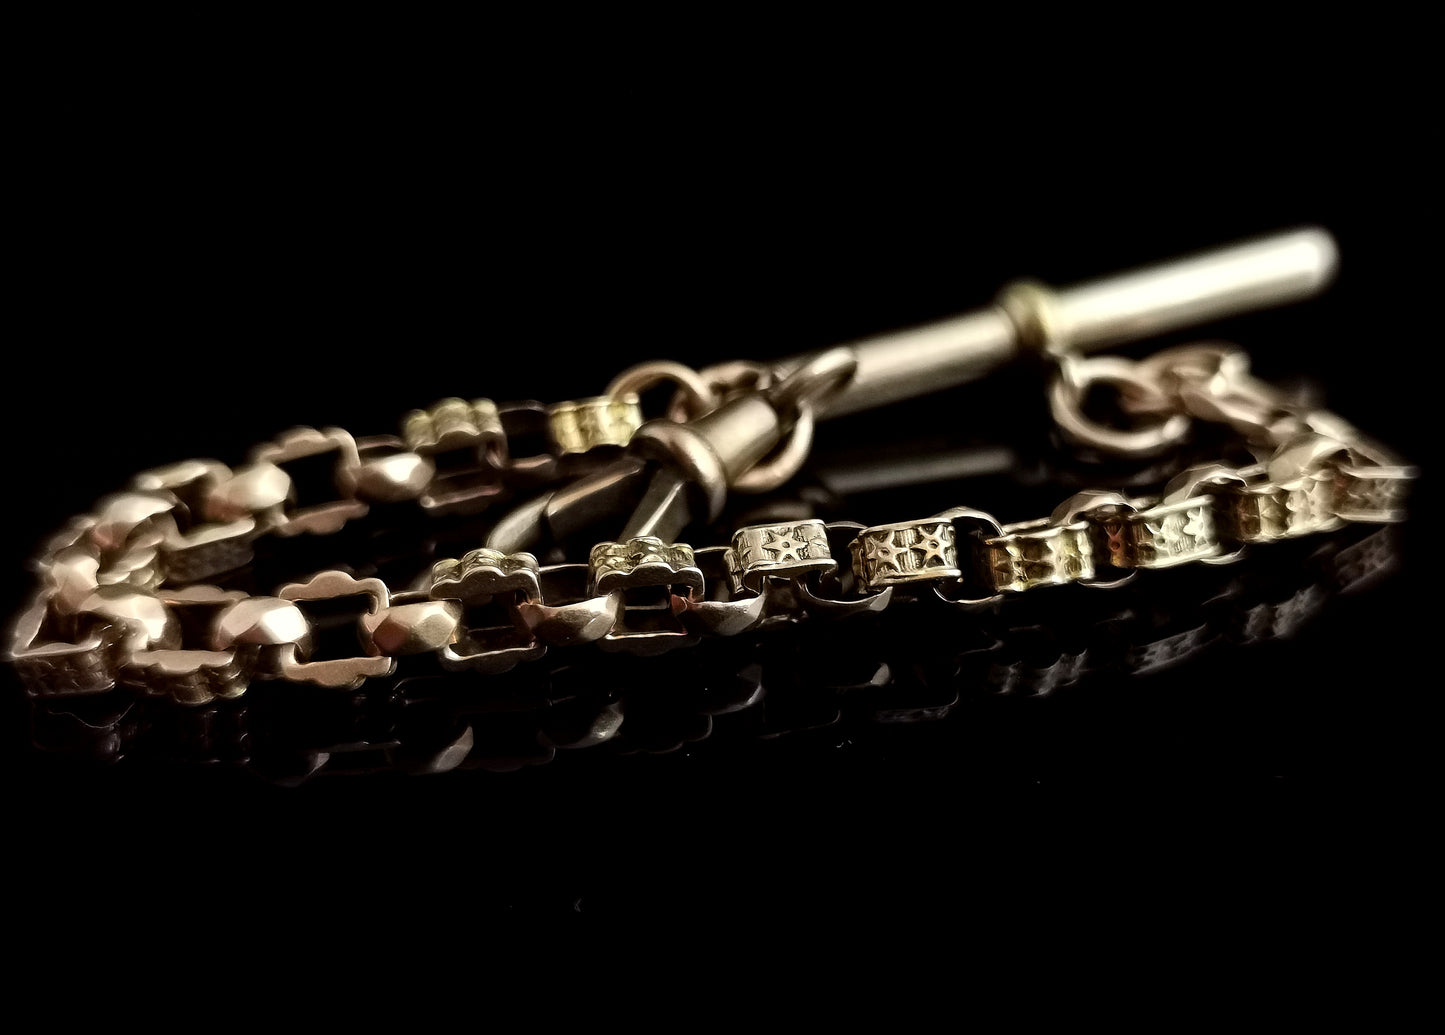 Antique 9ct gold fancy link watch chain, bracelet, Albert chain